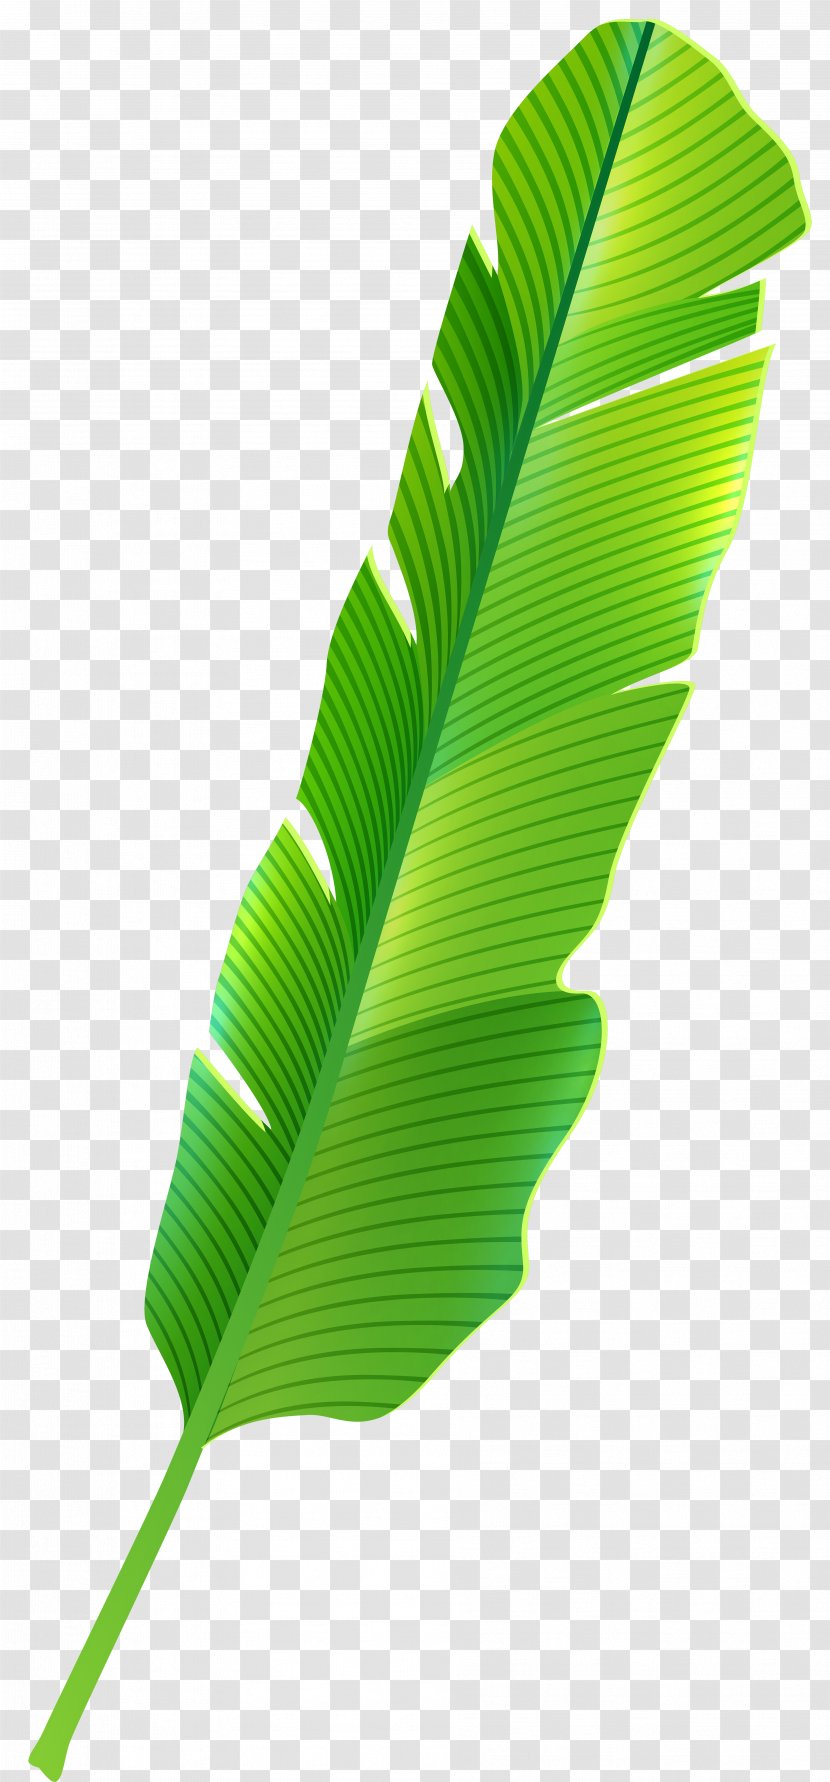 Tropics Leaf Clip Art - Grass - Banana Leaves Transparent PNG